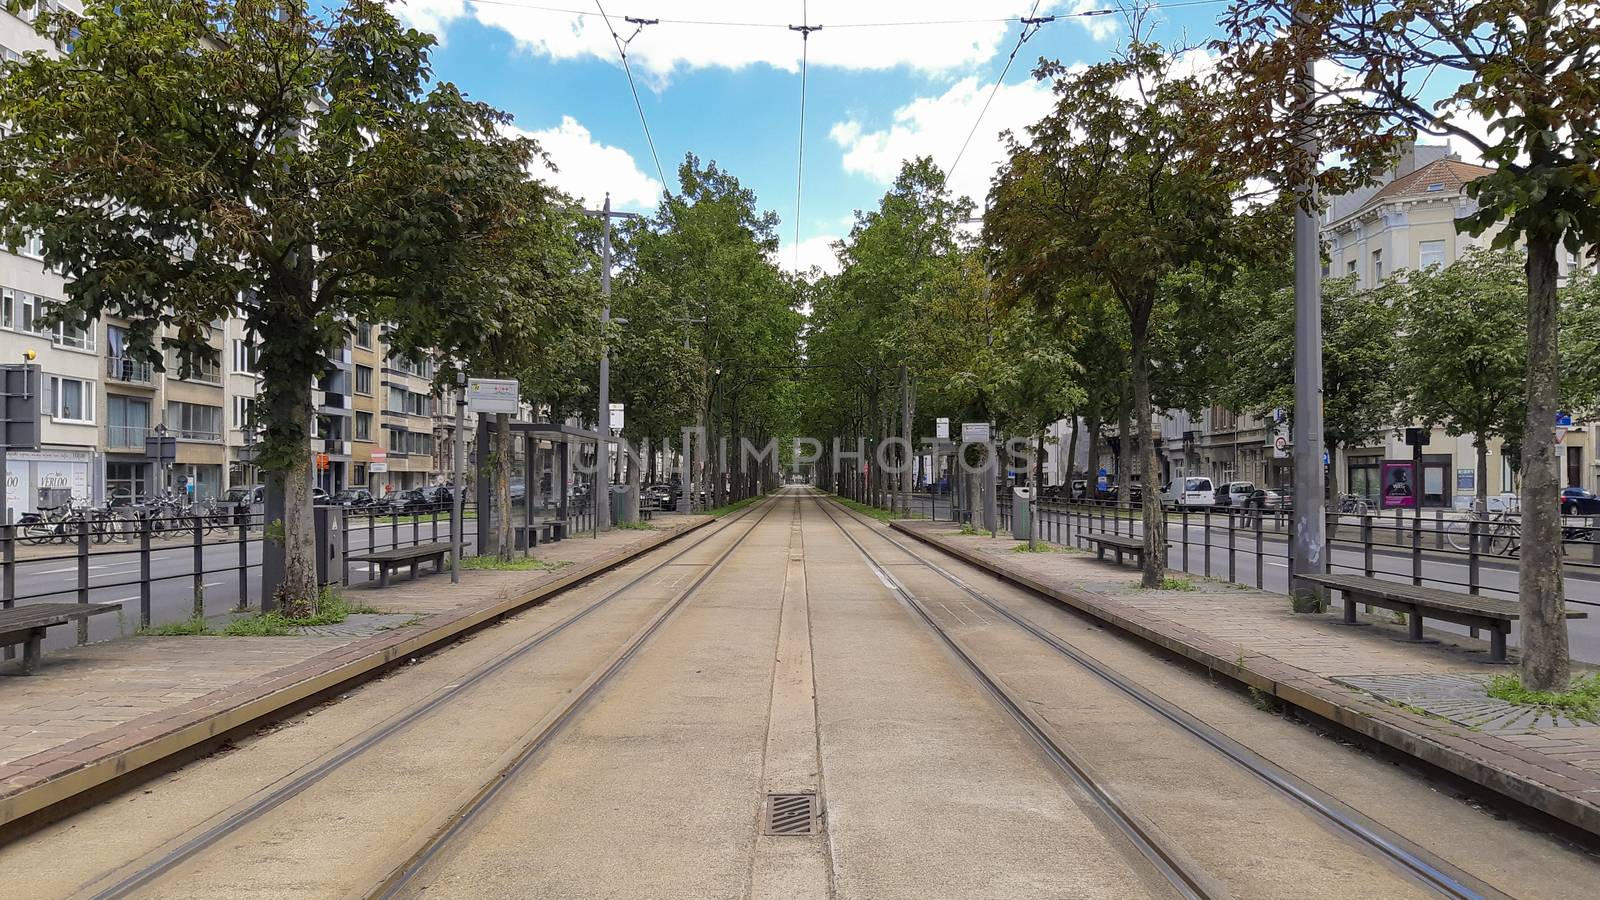 Antwerp, Belgium, July 2020: view on the tram tracks on De Leien